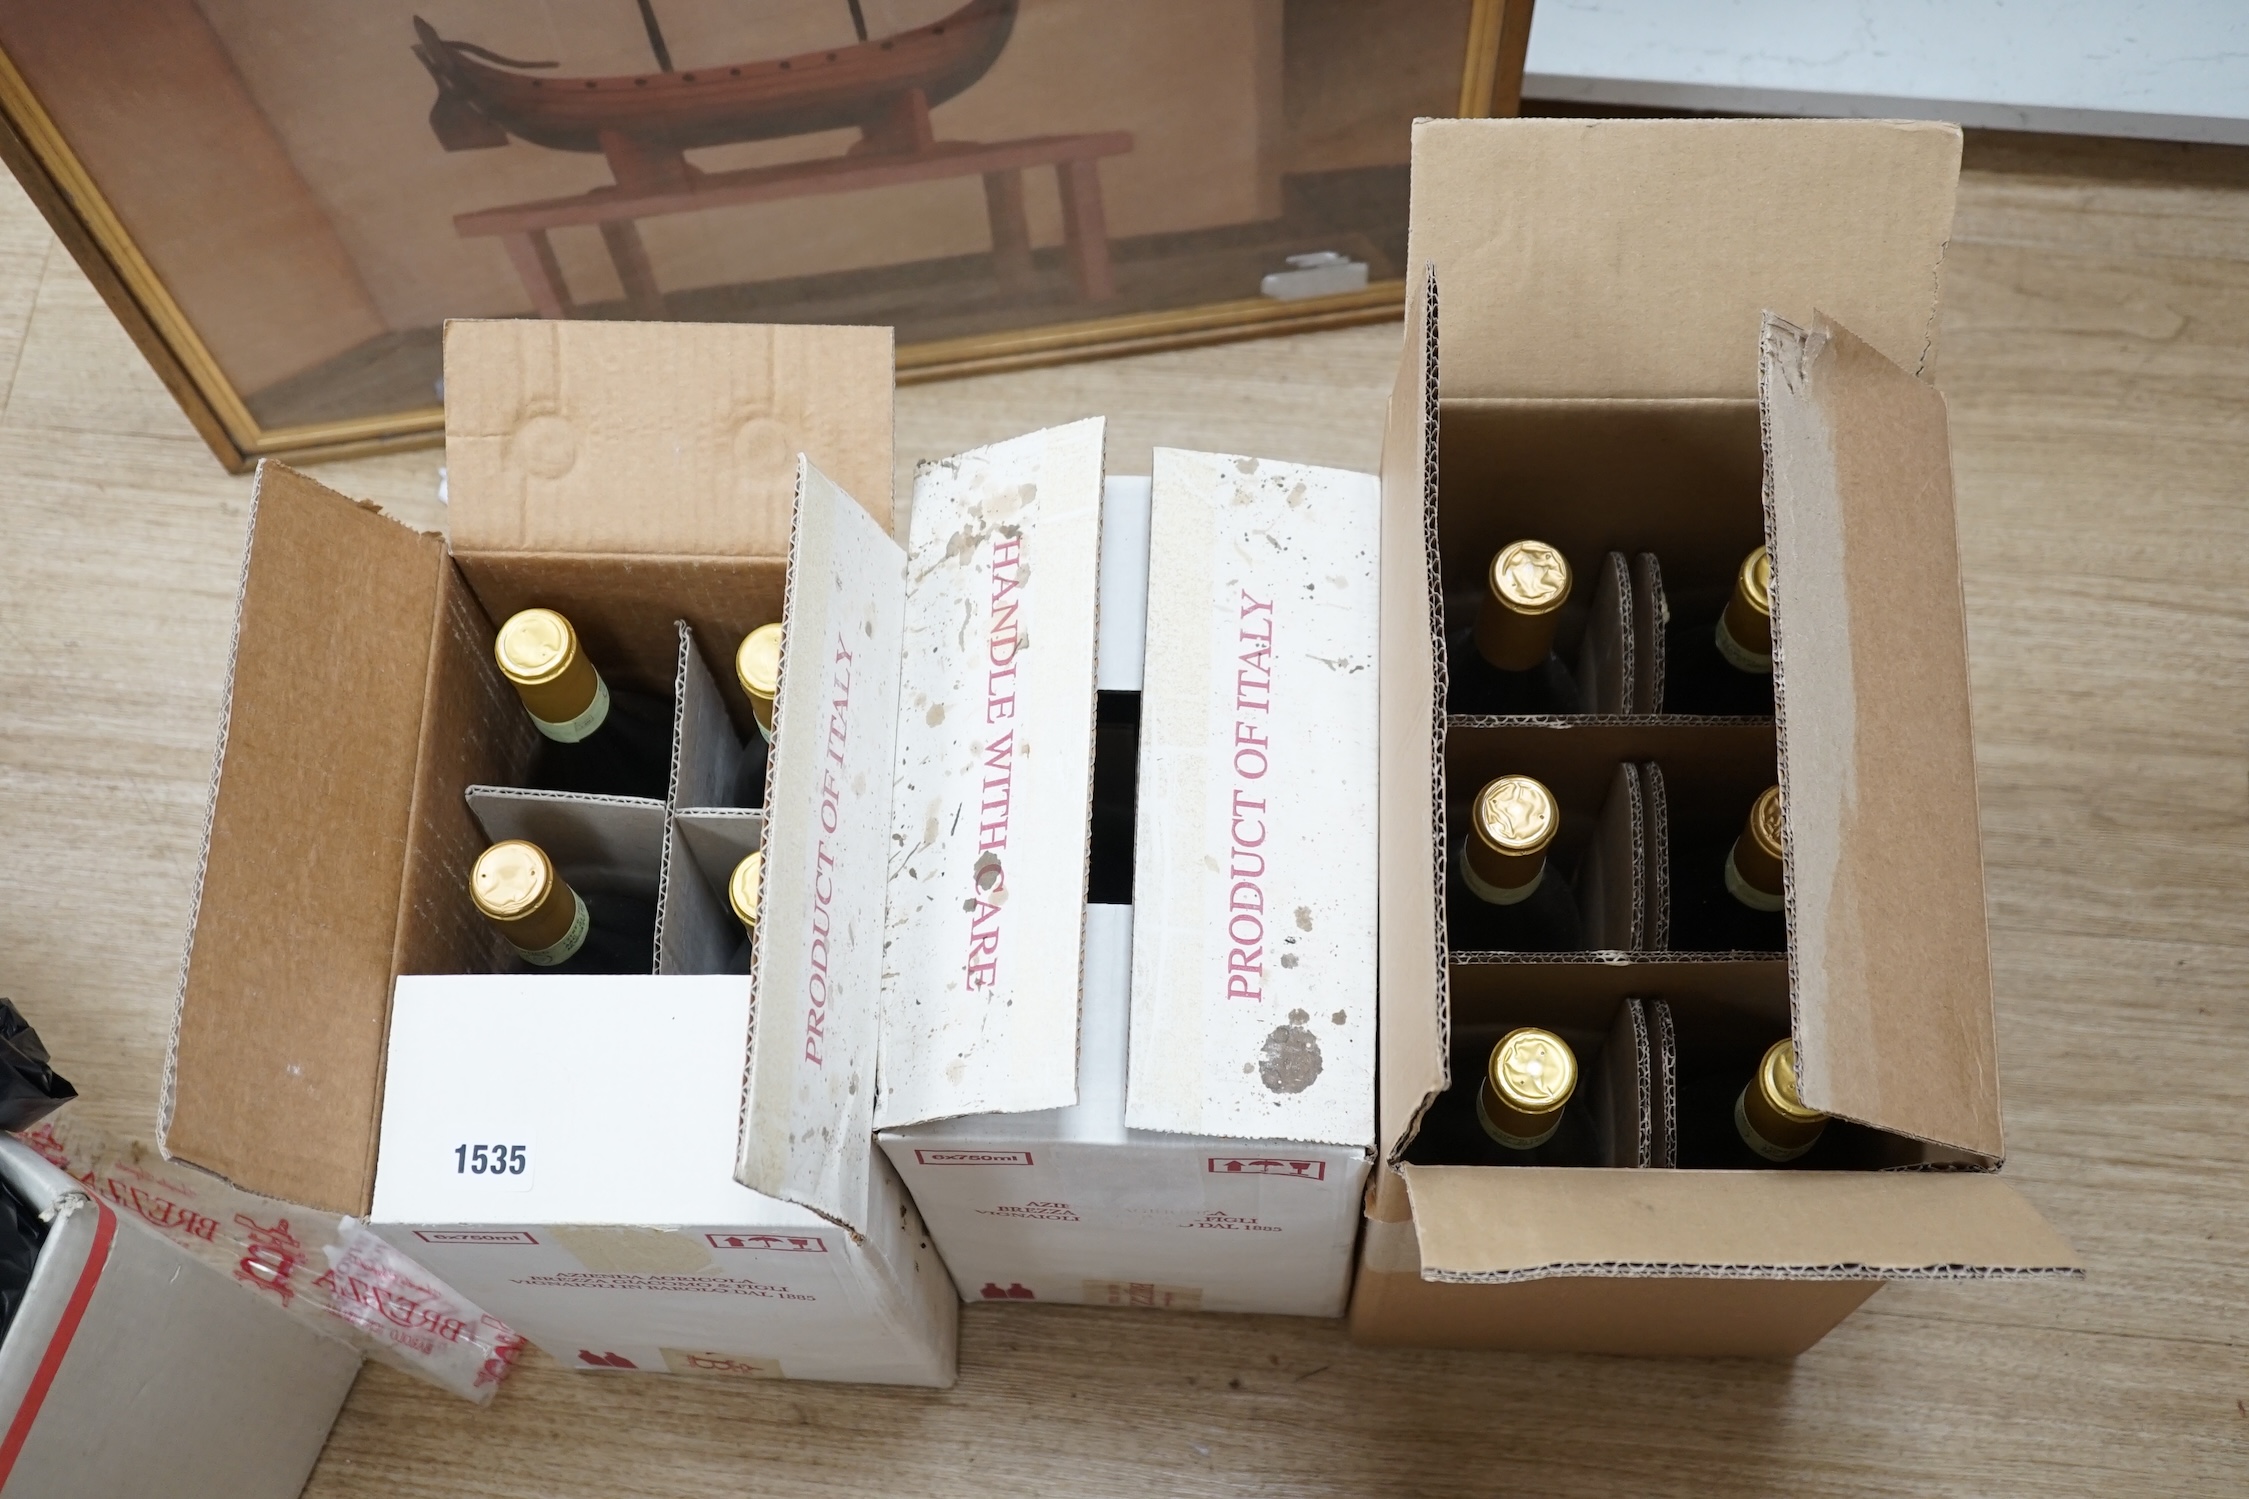 Eighteen bottles of Moscato D’Asti Brezzaville 2009. Condition - good, storage unknown